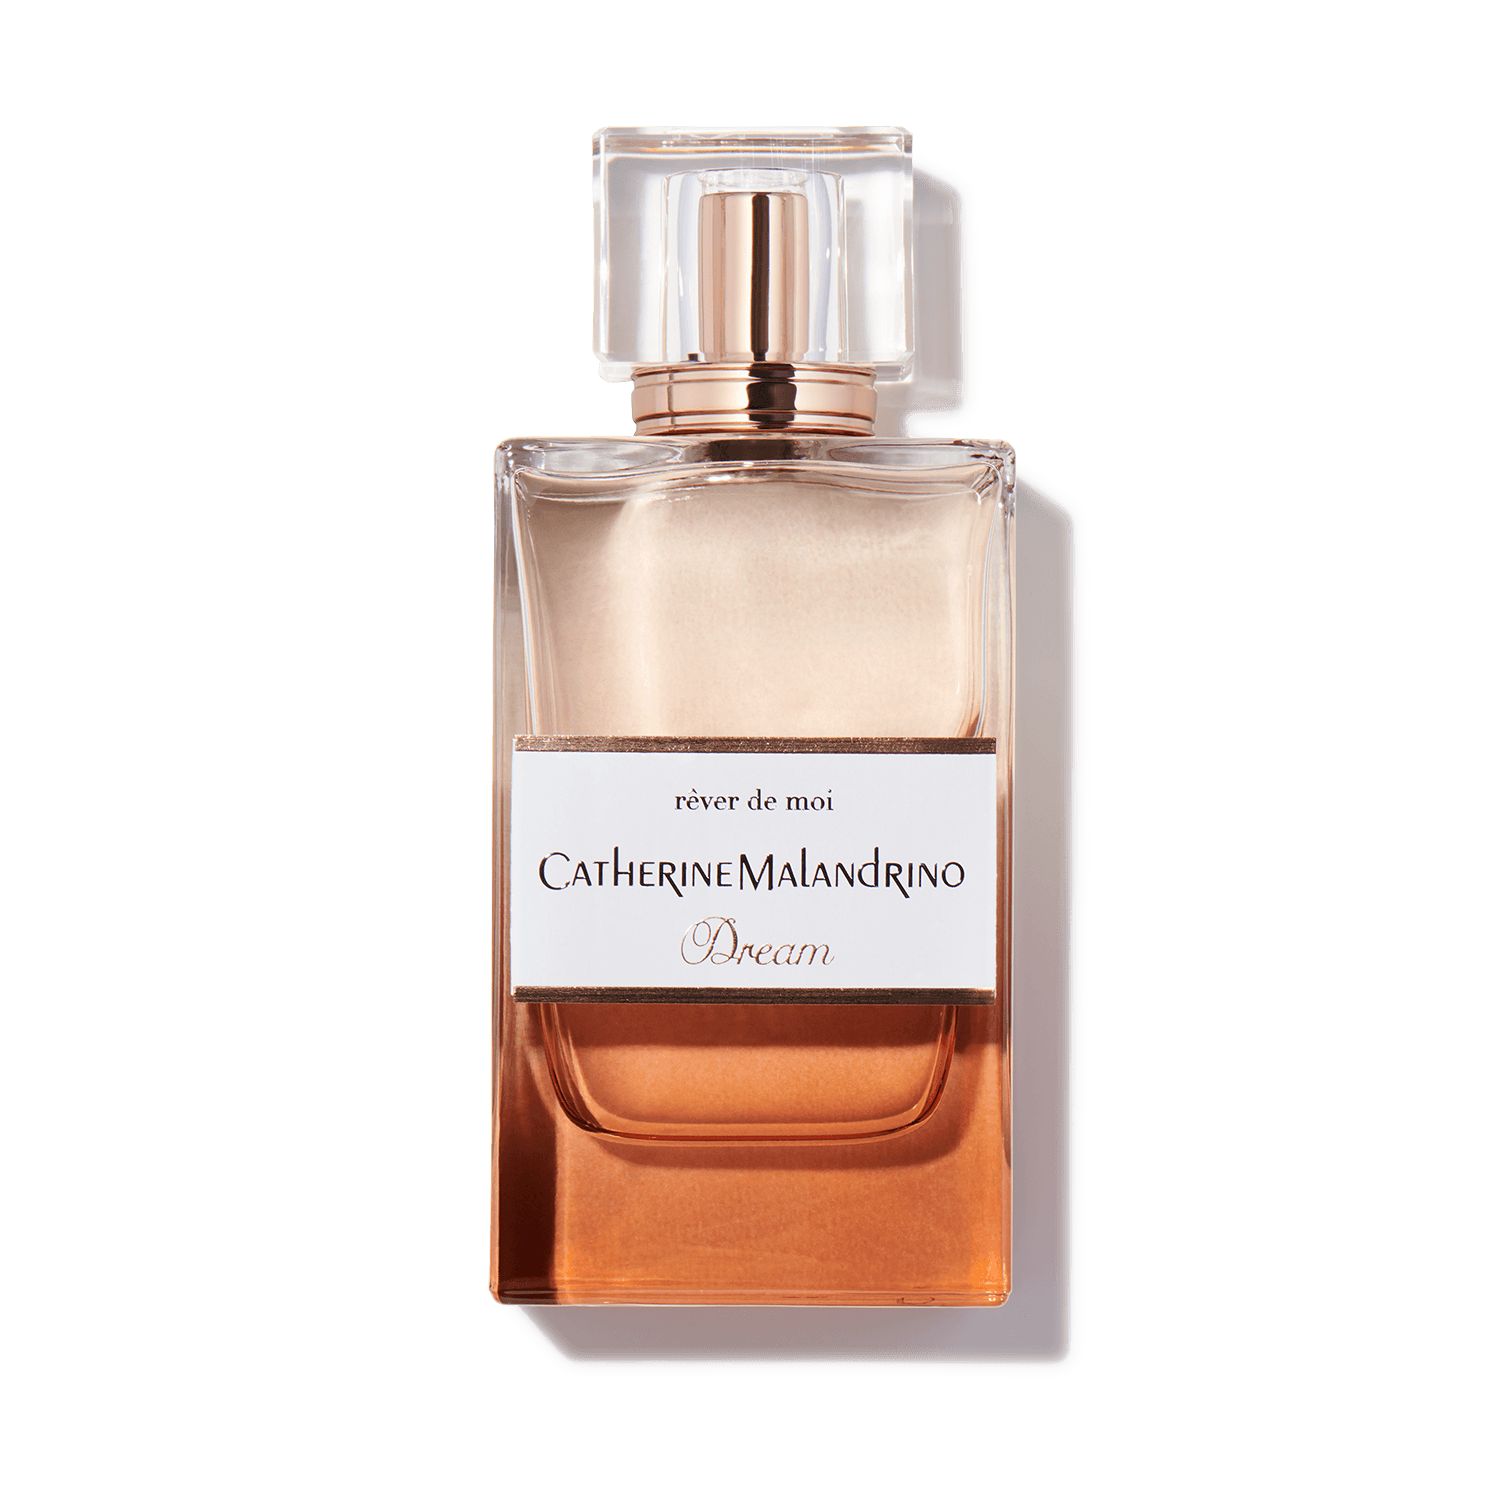 Buy Catherine Malandrino perfume Dream for at Scentbird